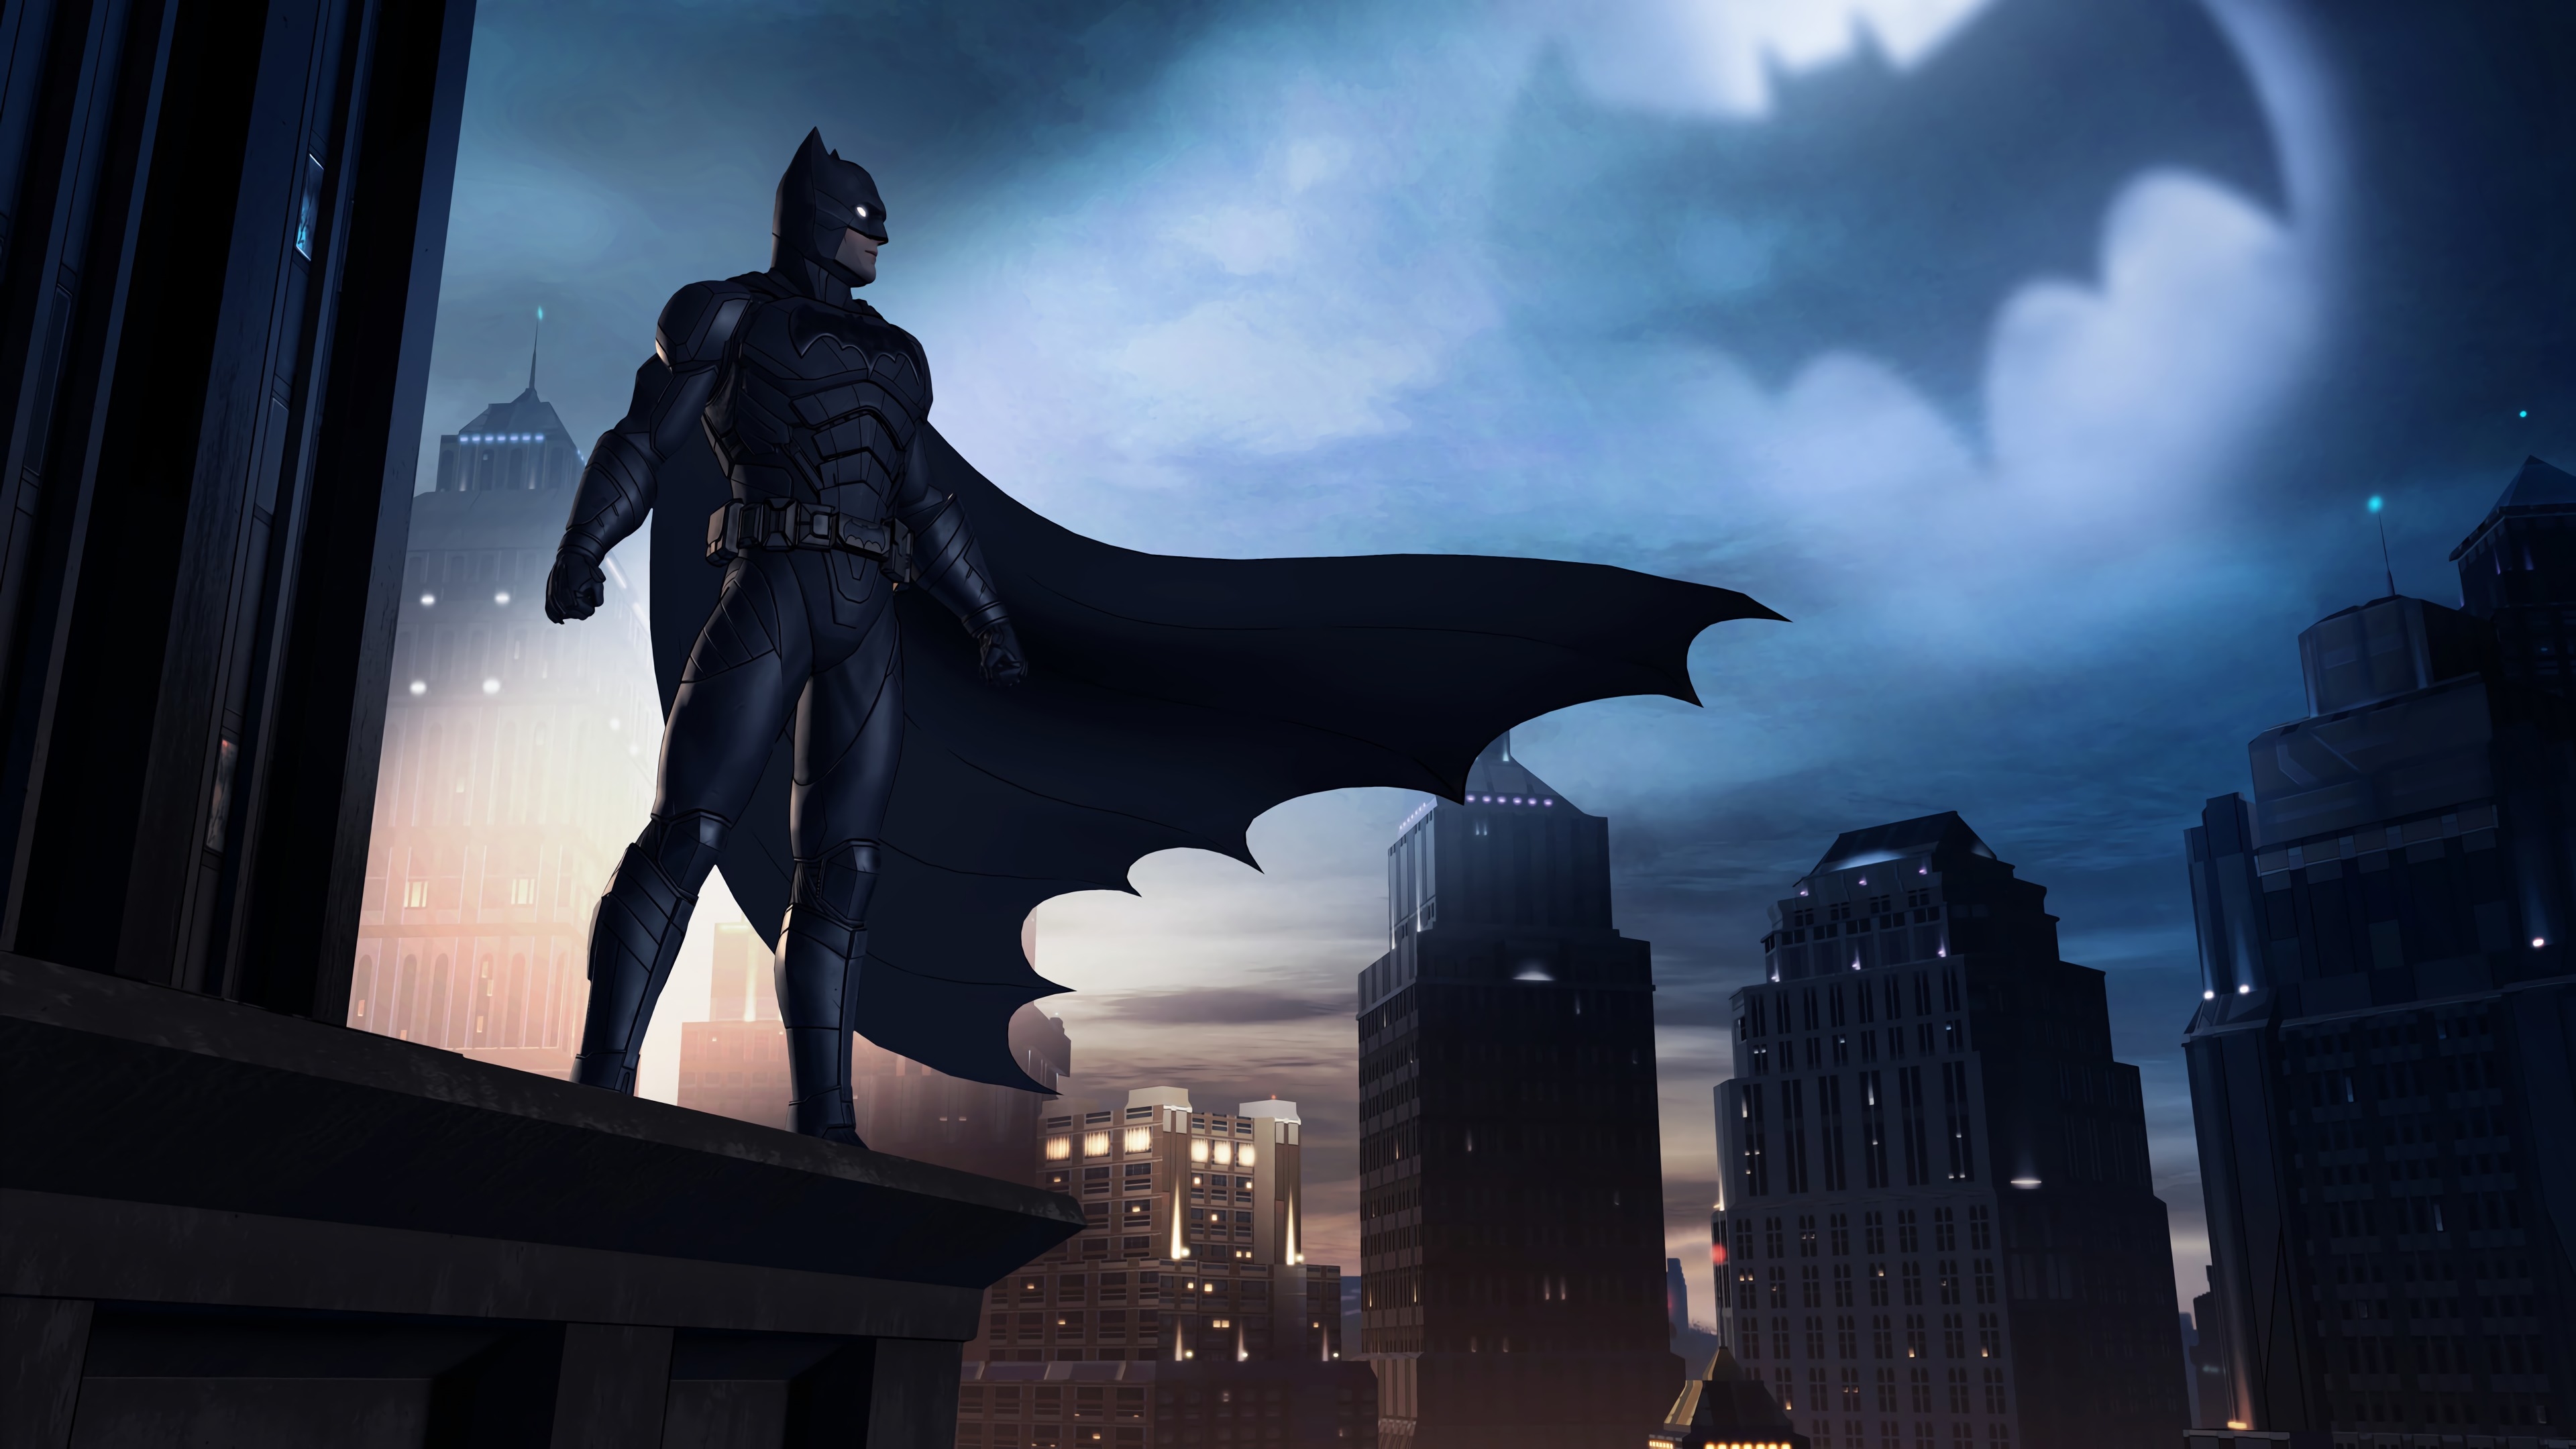 Batman Telltale Wallpaper, HD Superheroes 4K Wallpapers, Images, Photos and  Background - Wallpapers Den